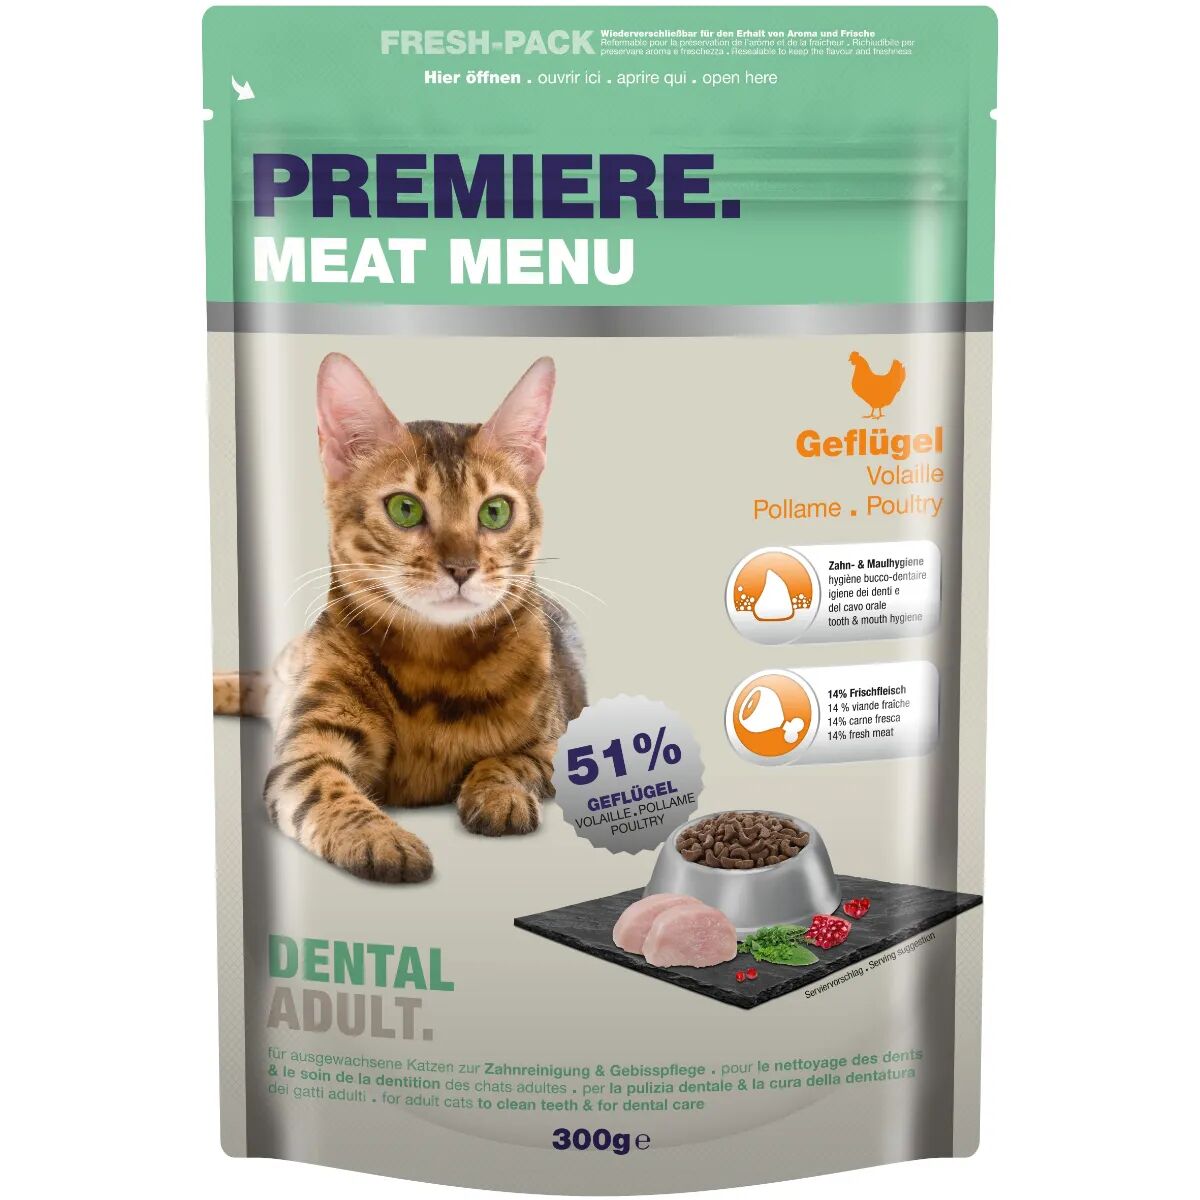 PREMIERE Meat Menu Dental per Gatto Adult con Pollame 300G